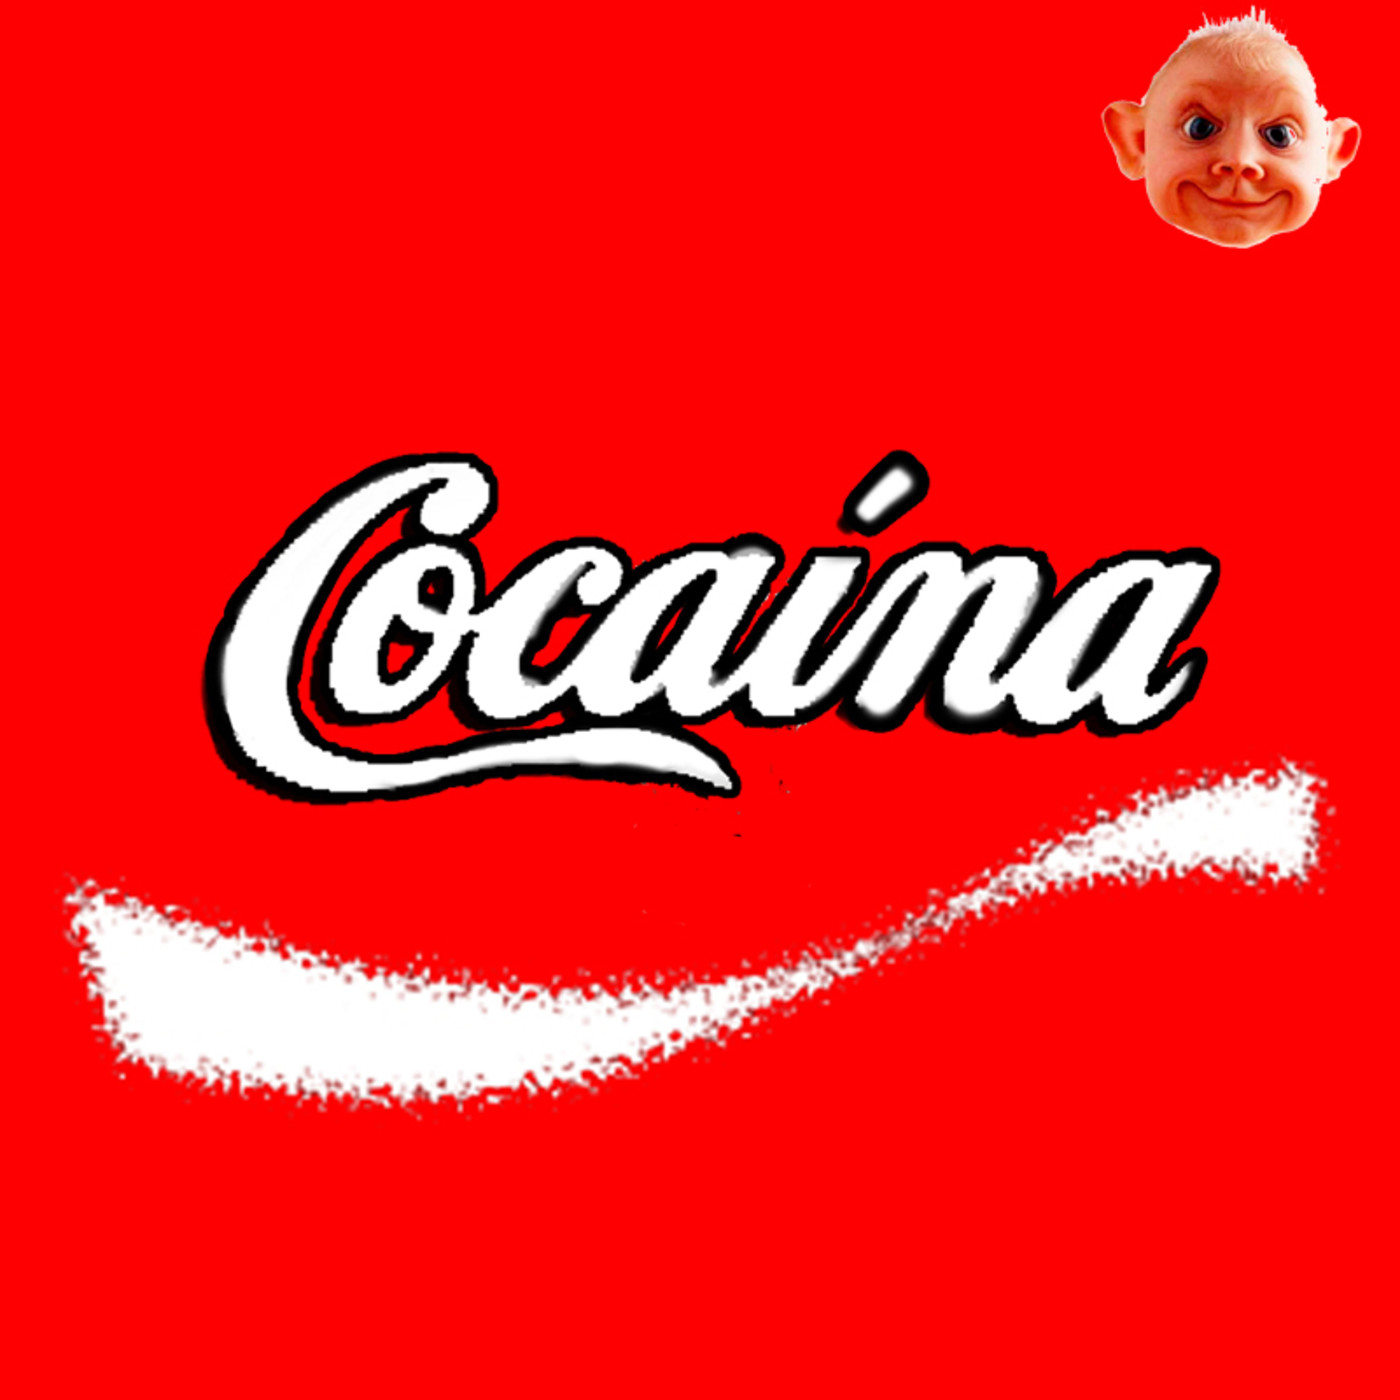 Cocaina - Cocaine